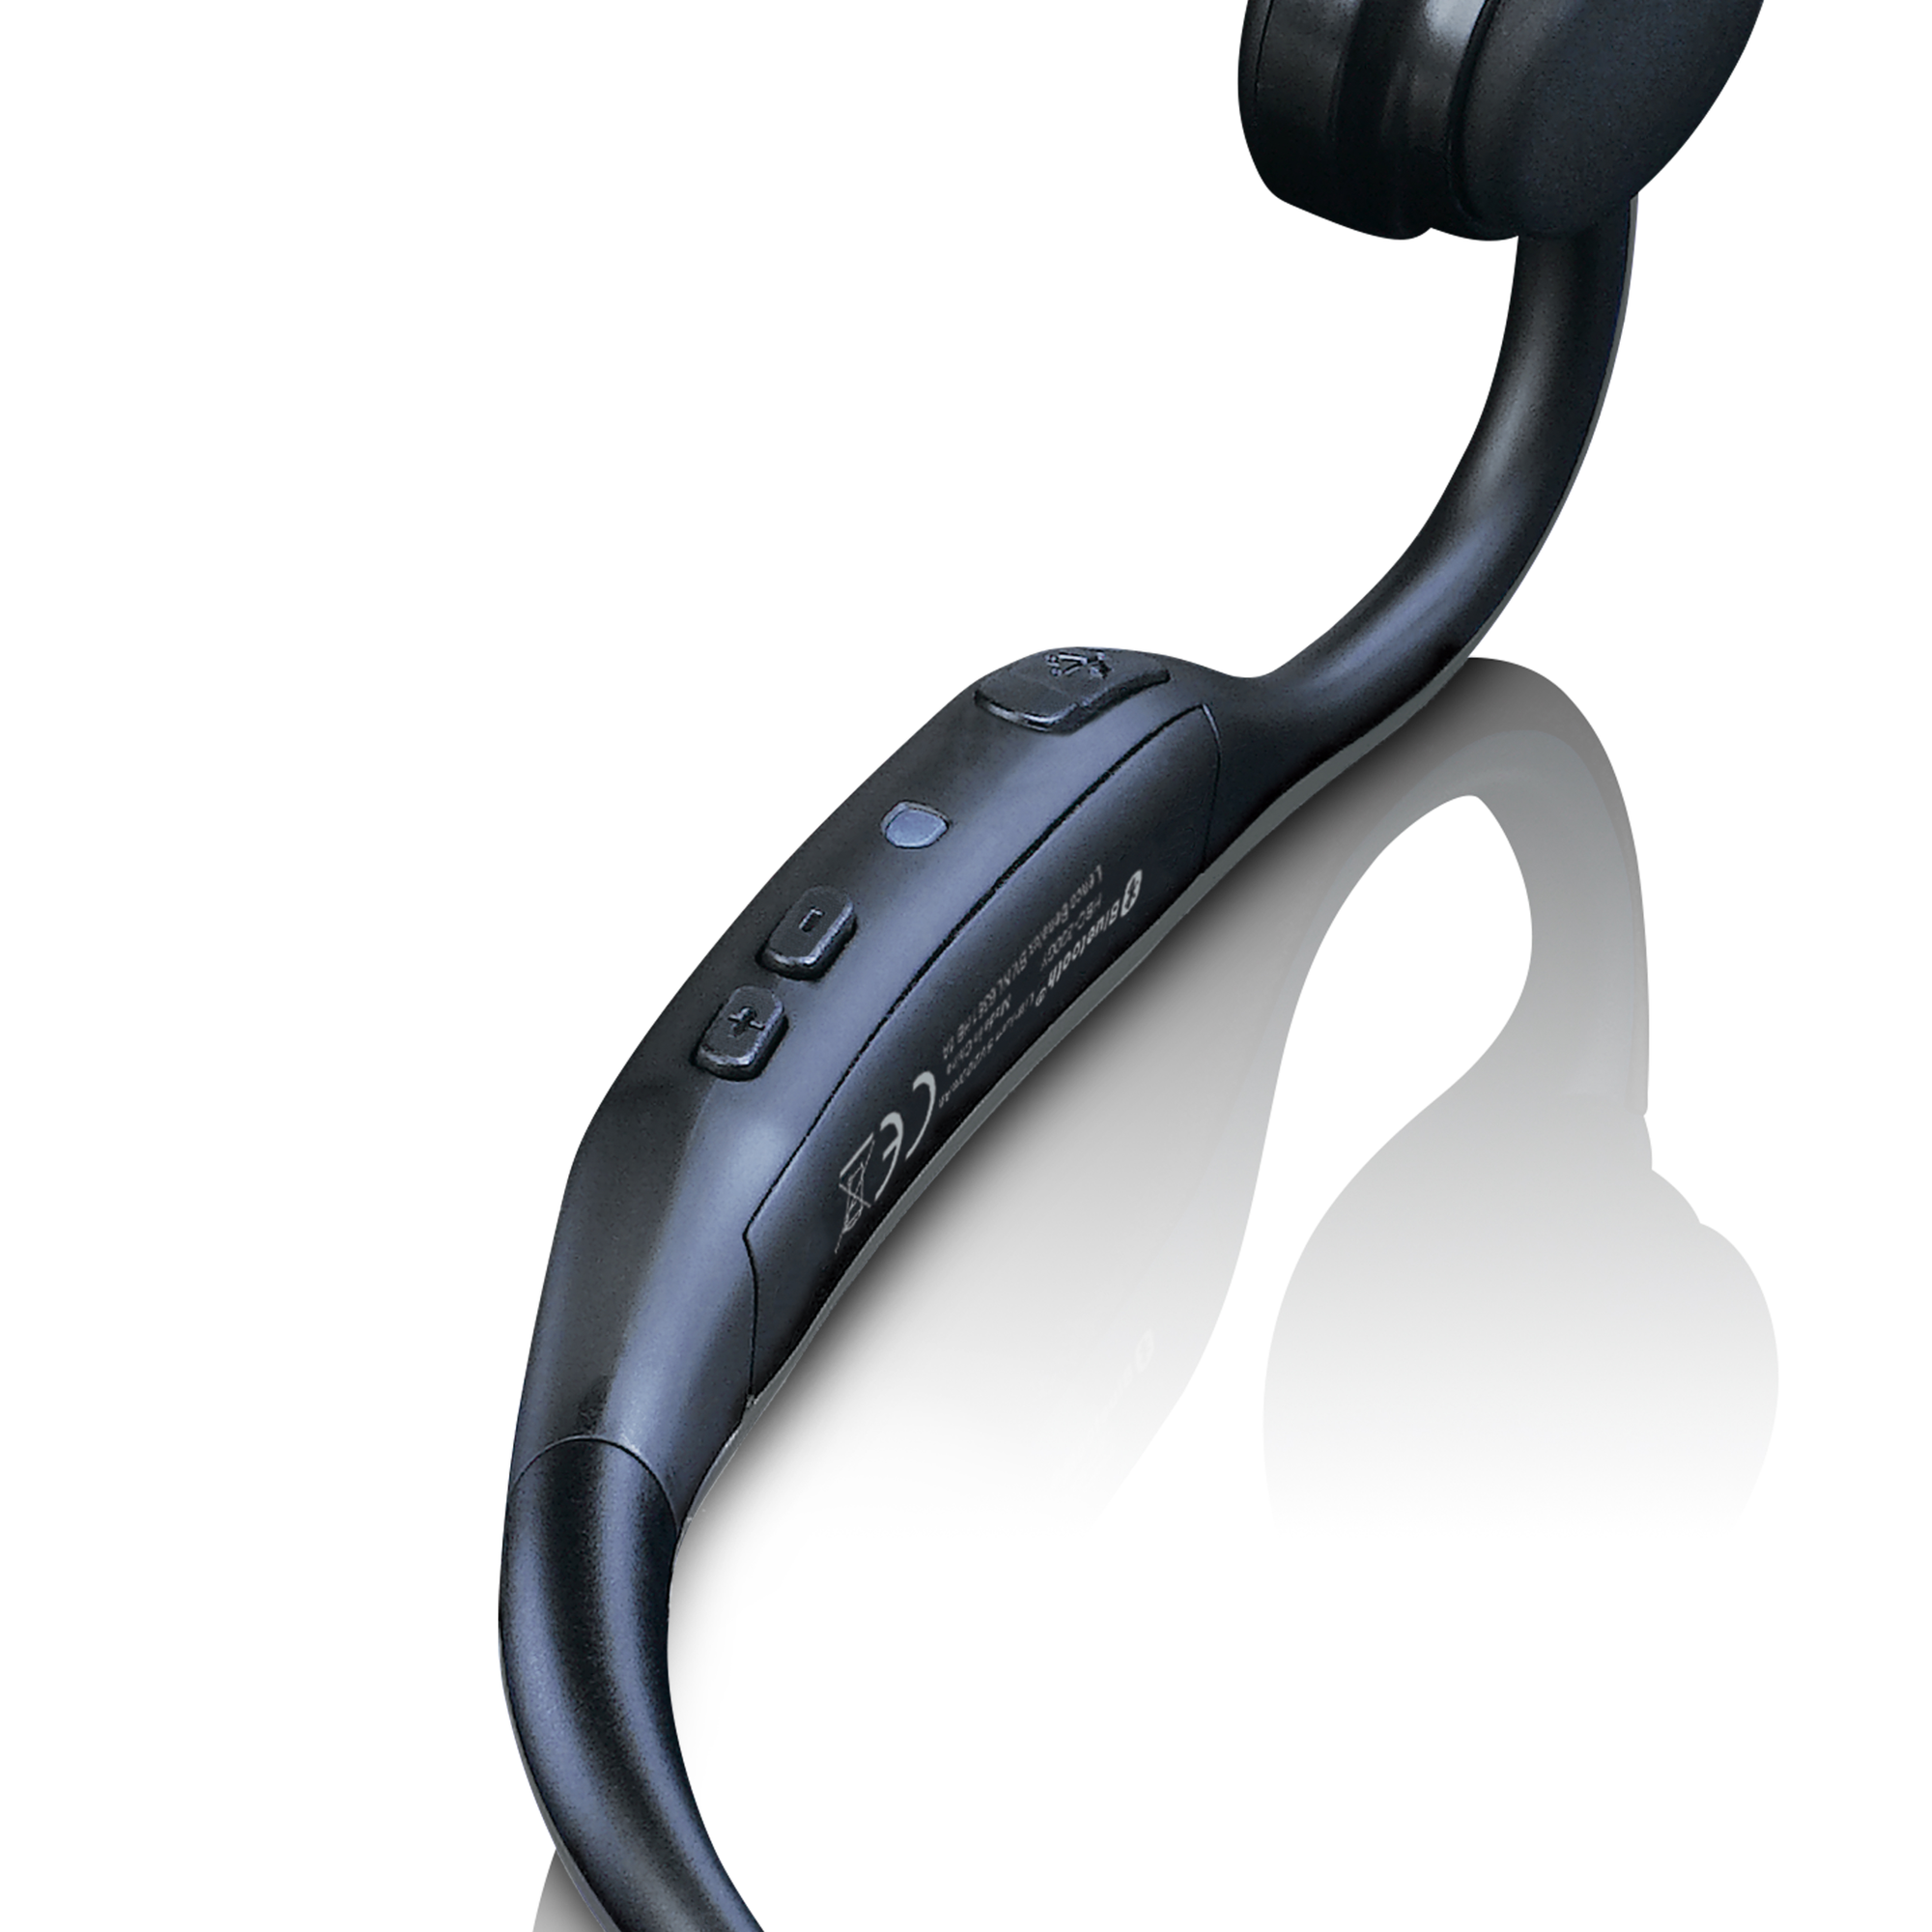 LENCO HBC-200GY, Kinnbügel Bluetooth Schwarz-Grau Headphone Bluetooth